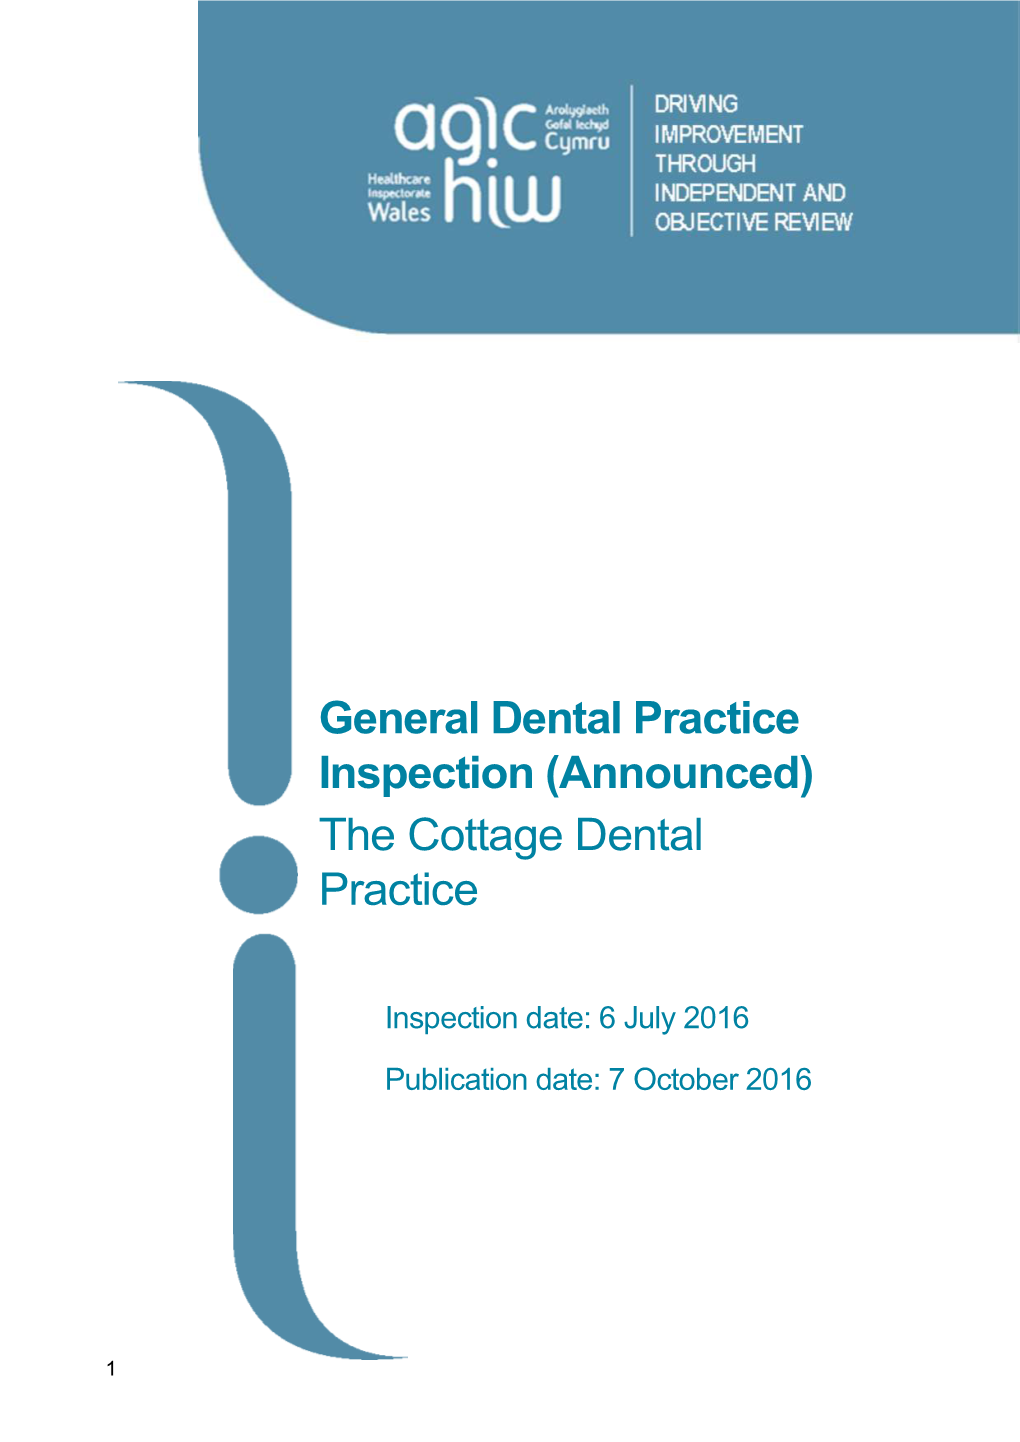 The Cottage Dental Practice